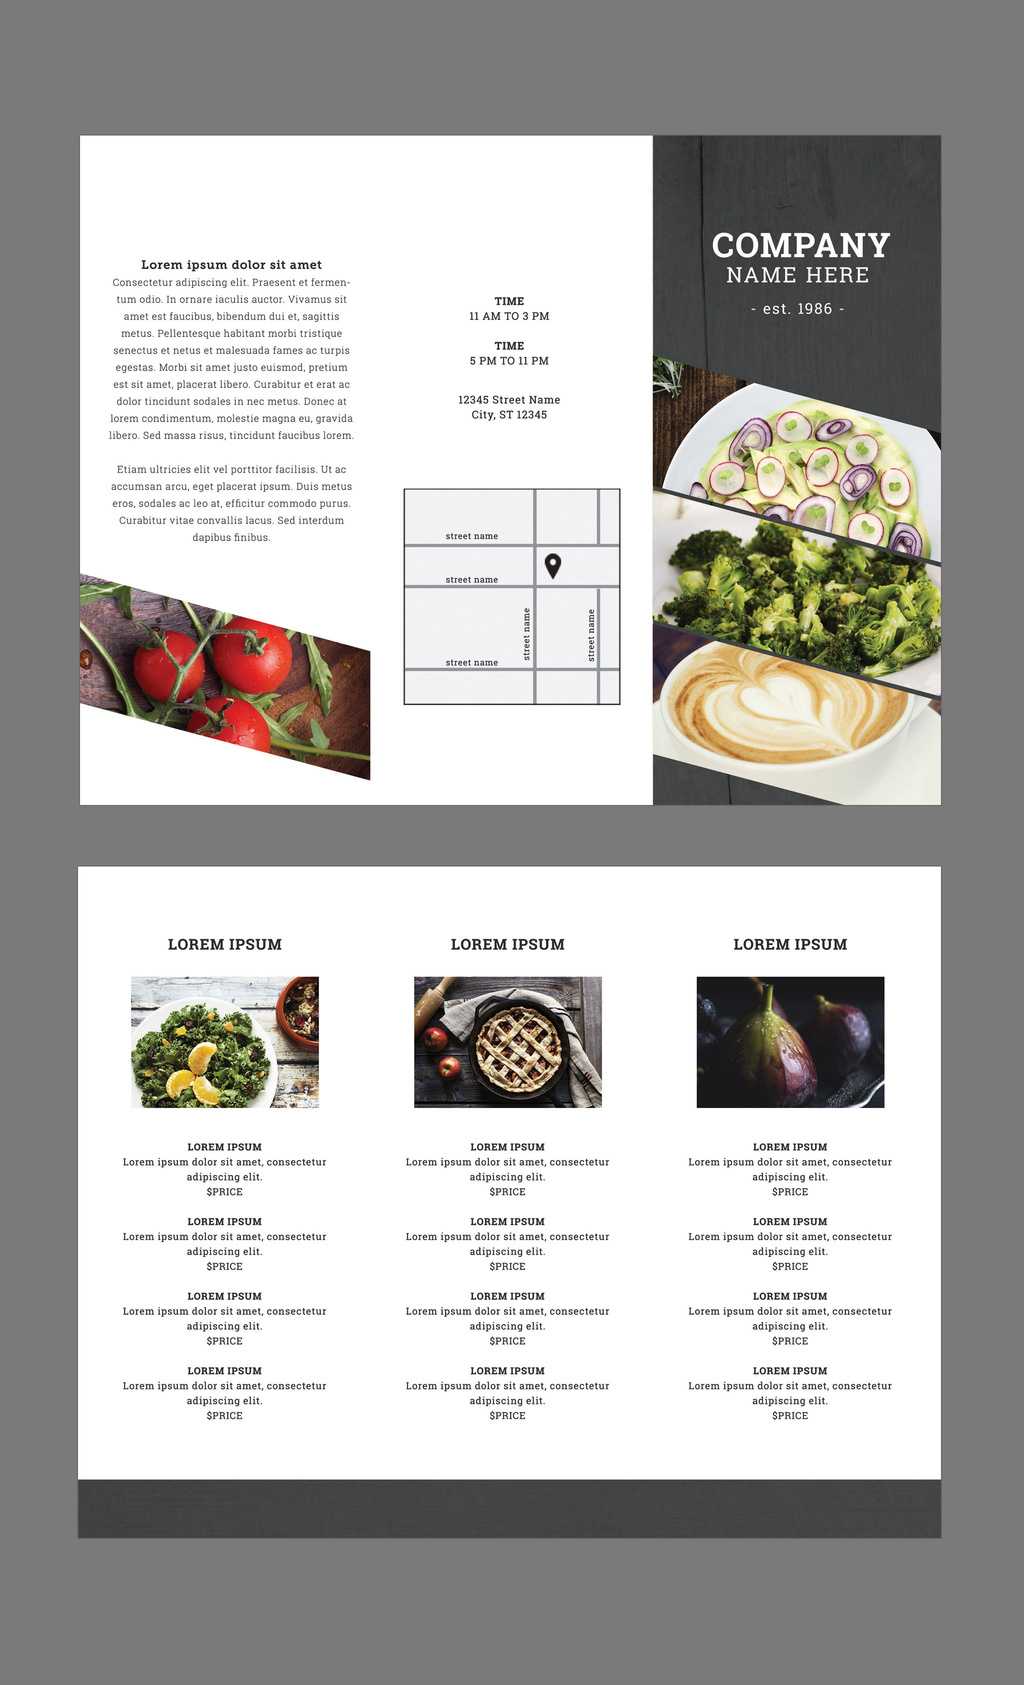 Professional Brochure Templates | Adobe Blog Inside Brochure Templates Adobe Illustrator